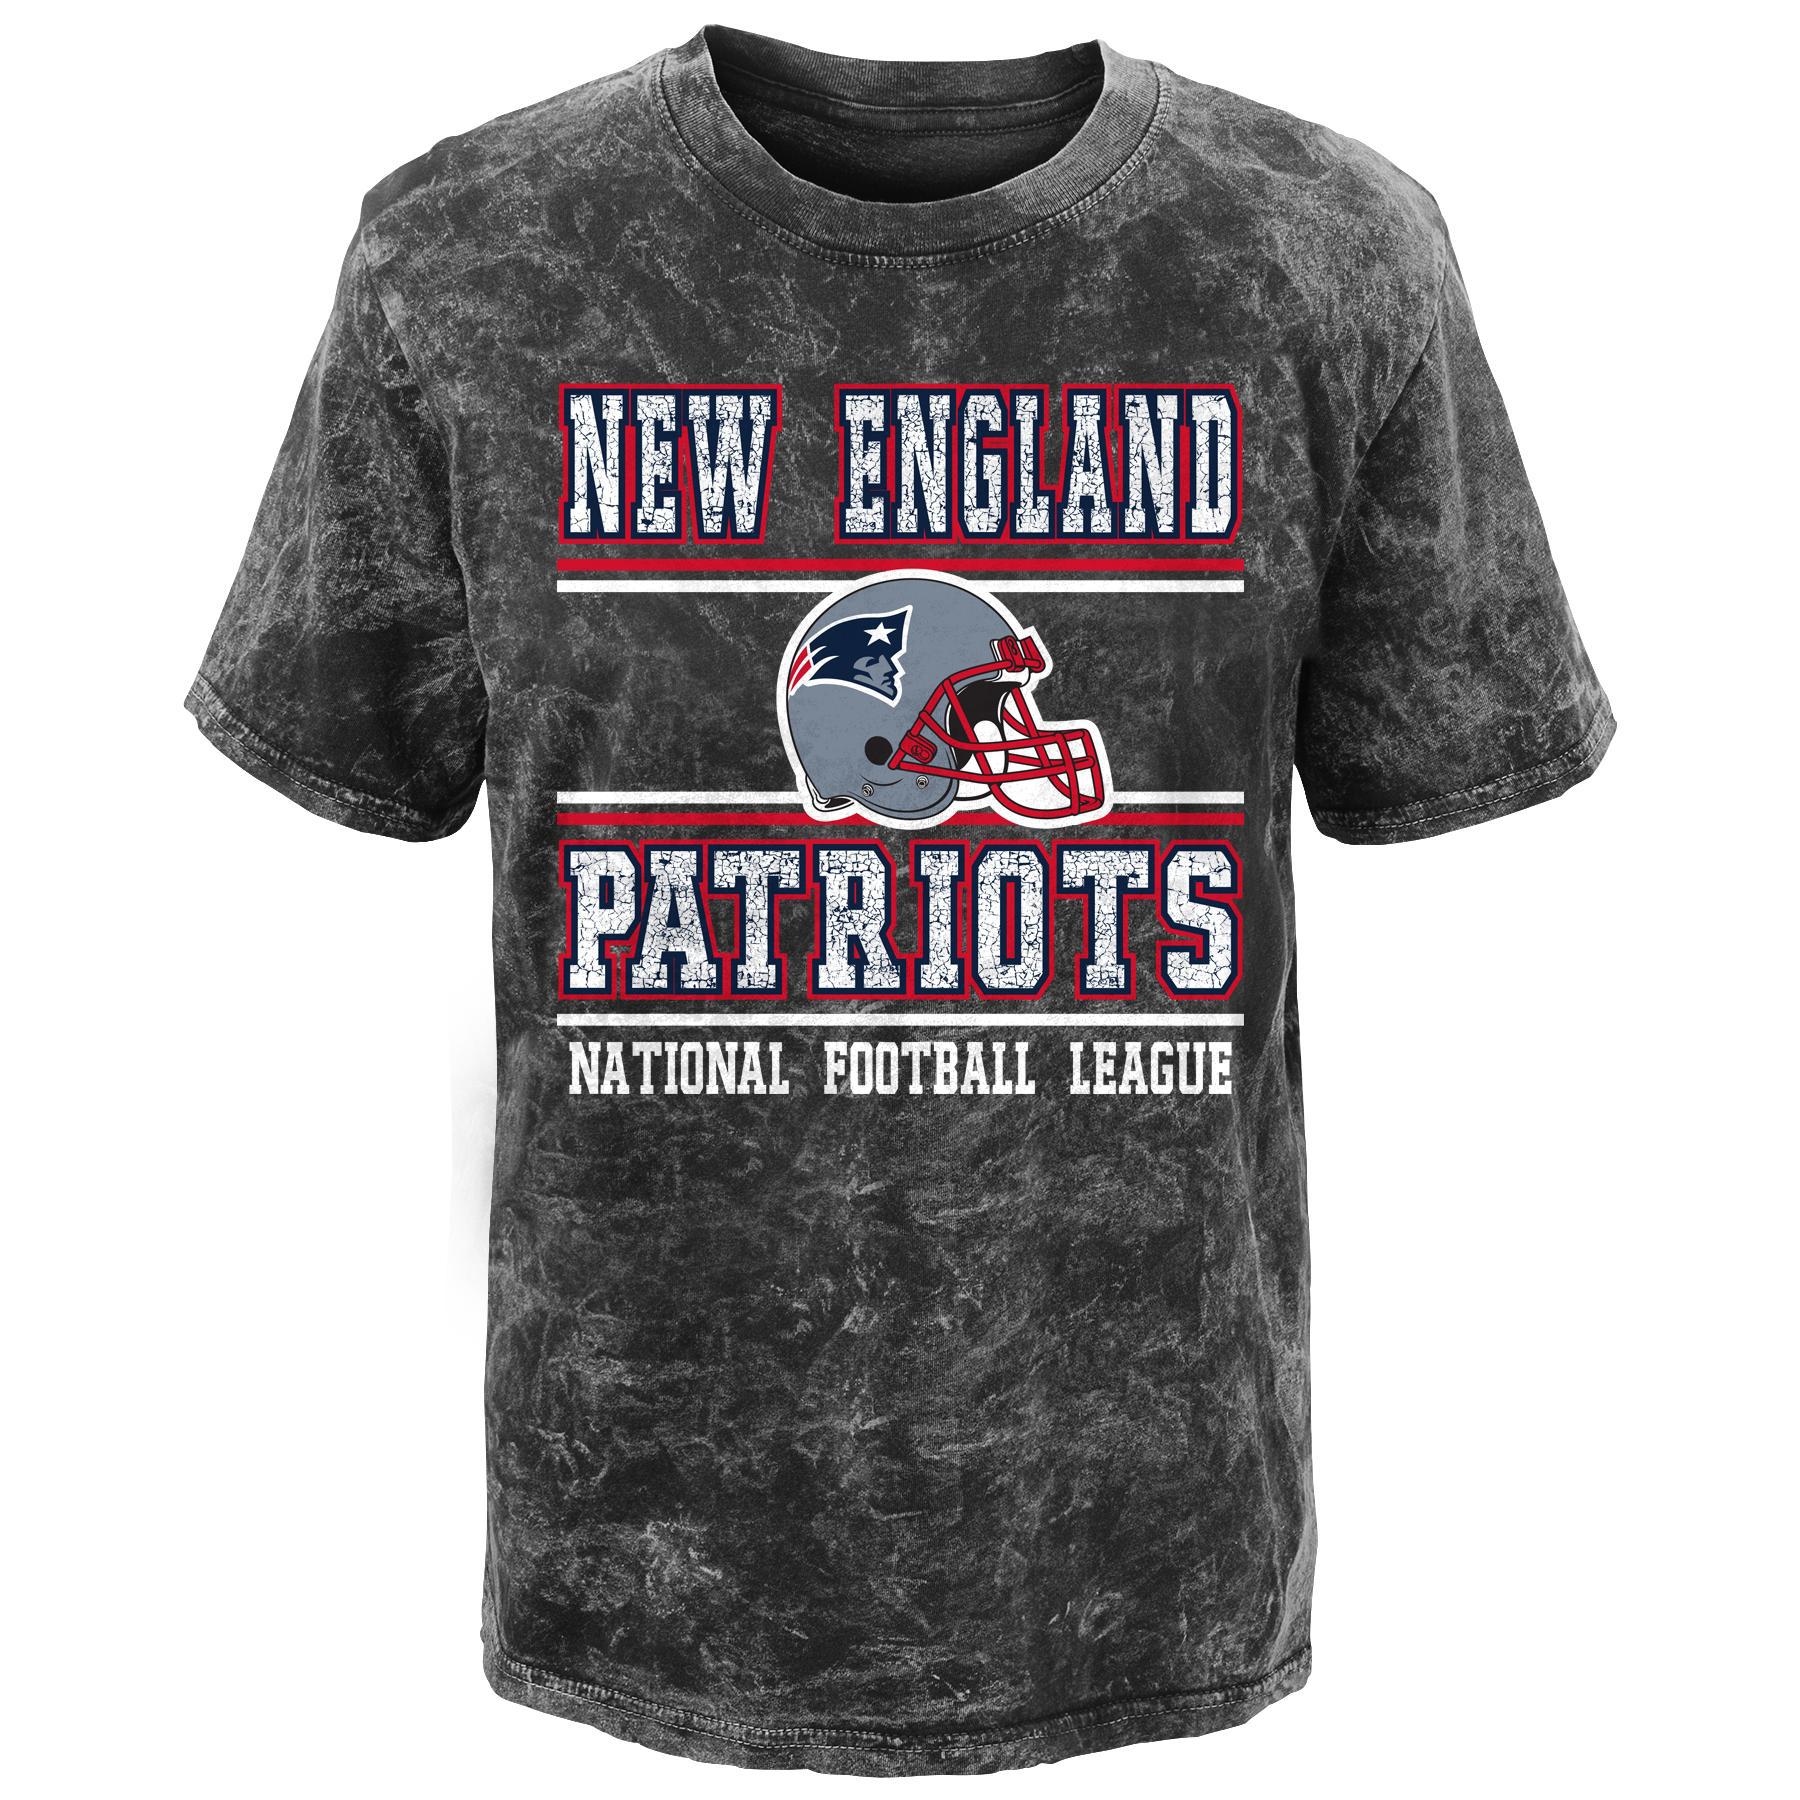 NFL Boys' Graphic T-Shirt - New England Patriots